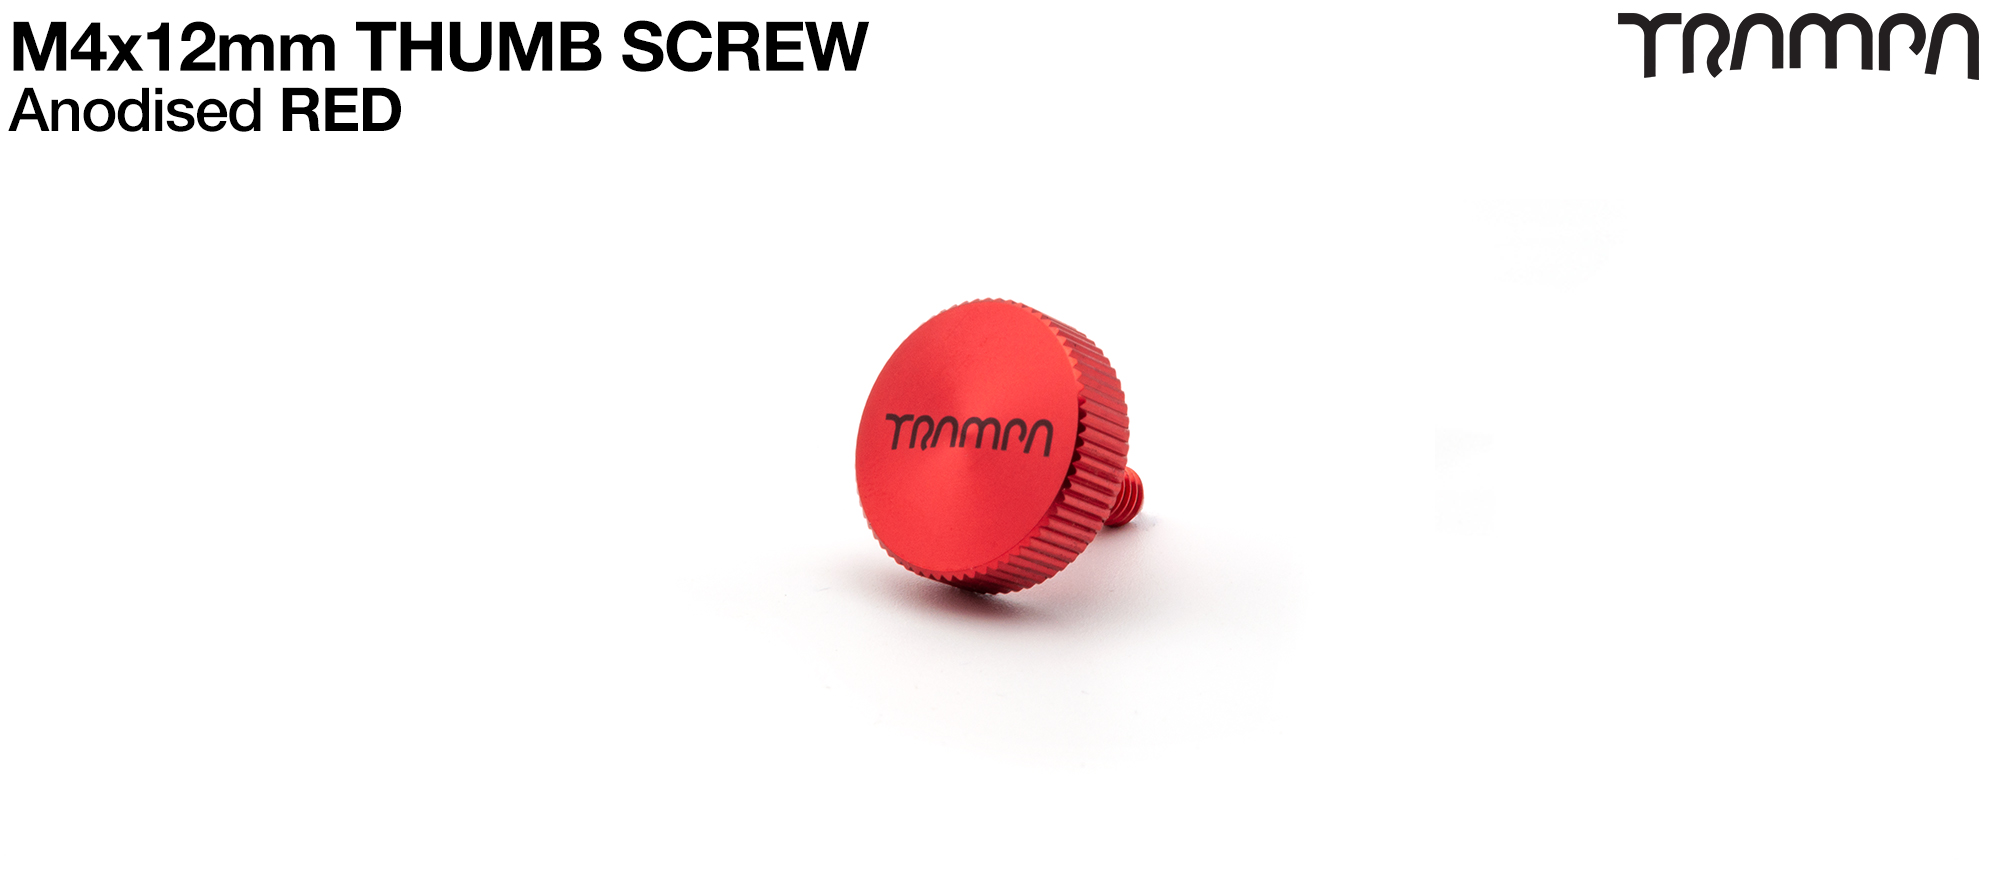 Thumb Screw - RED 